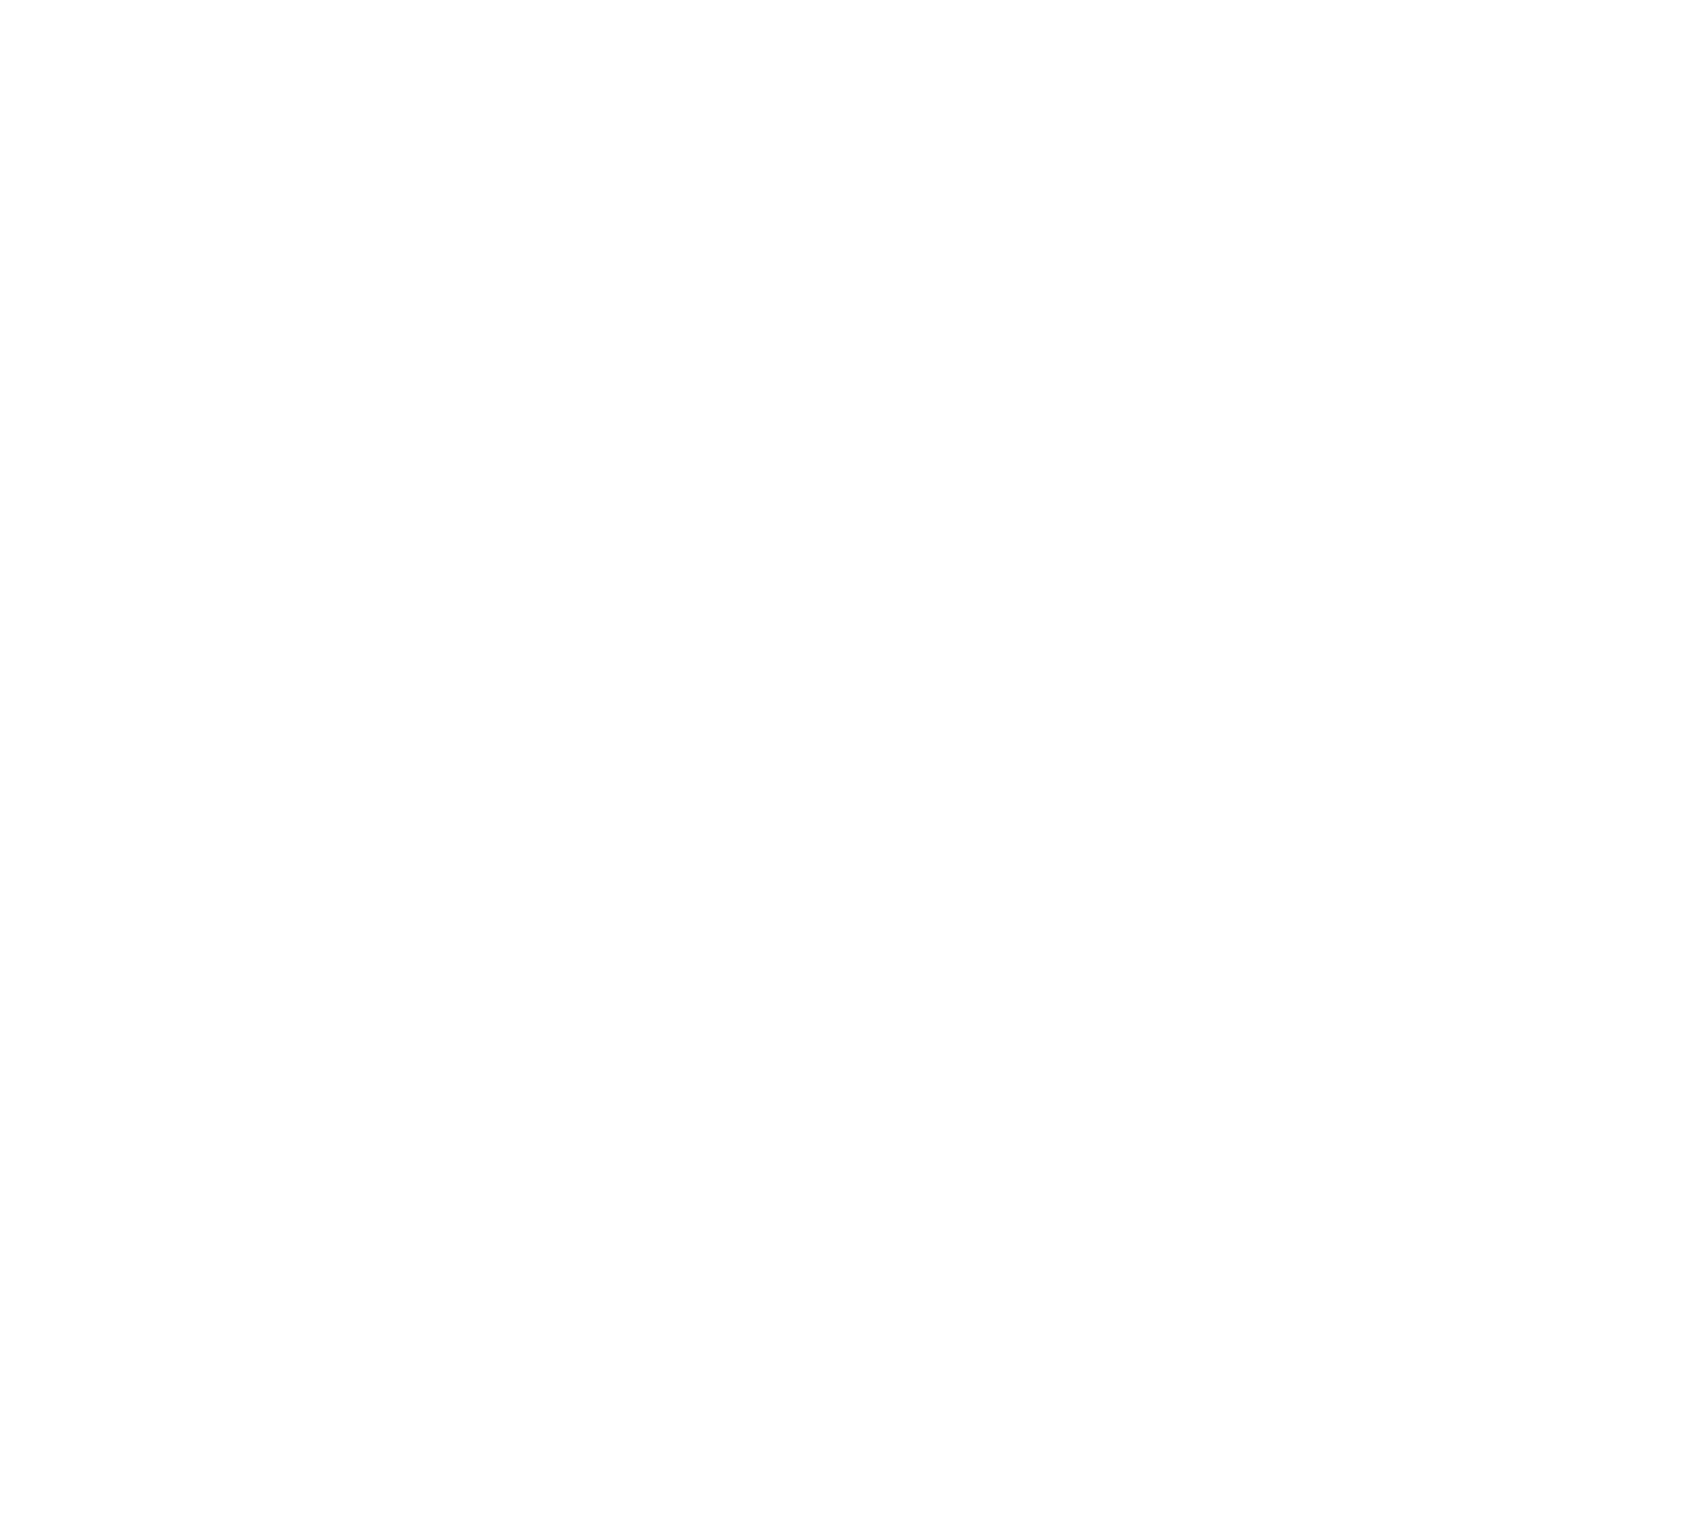 A12 • FILM PHOTO PRODUCTION